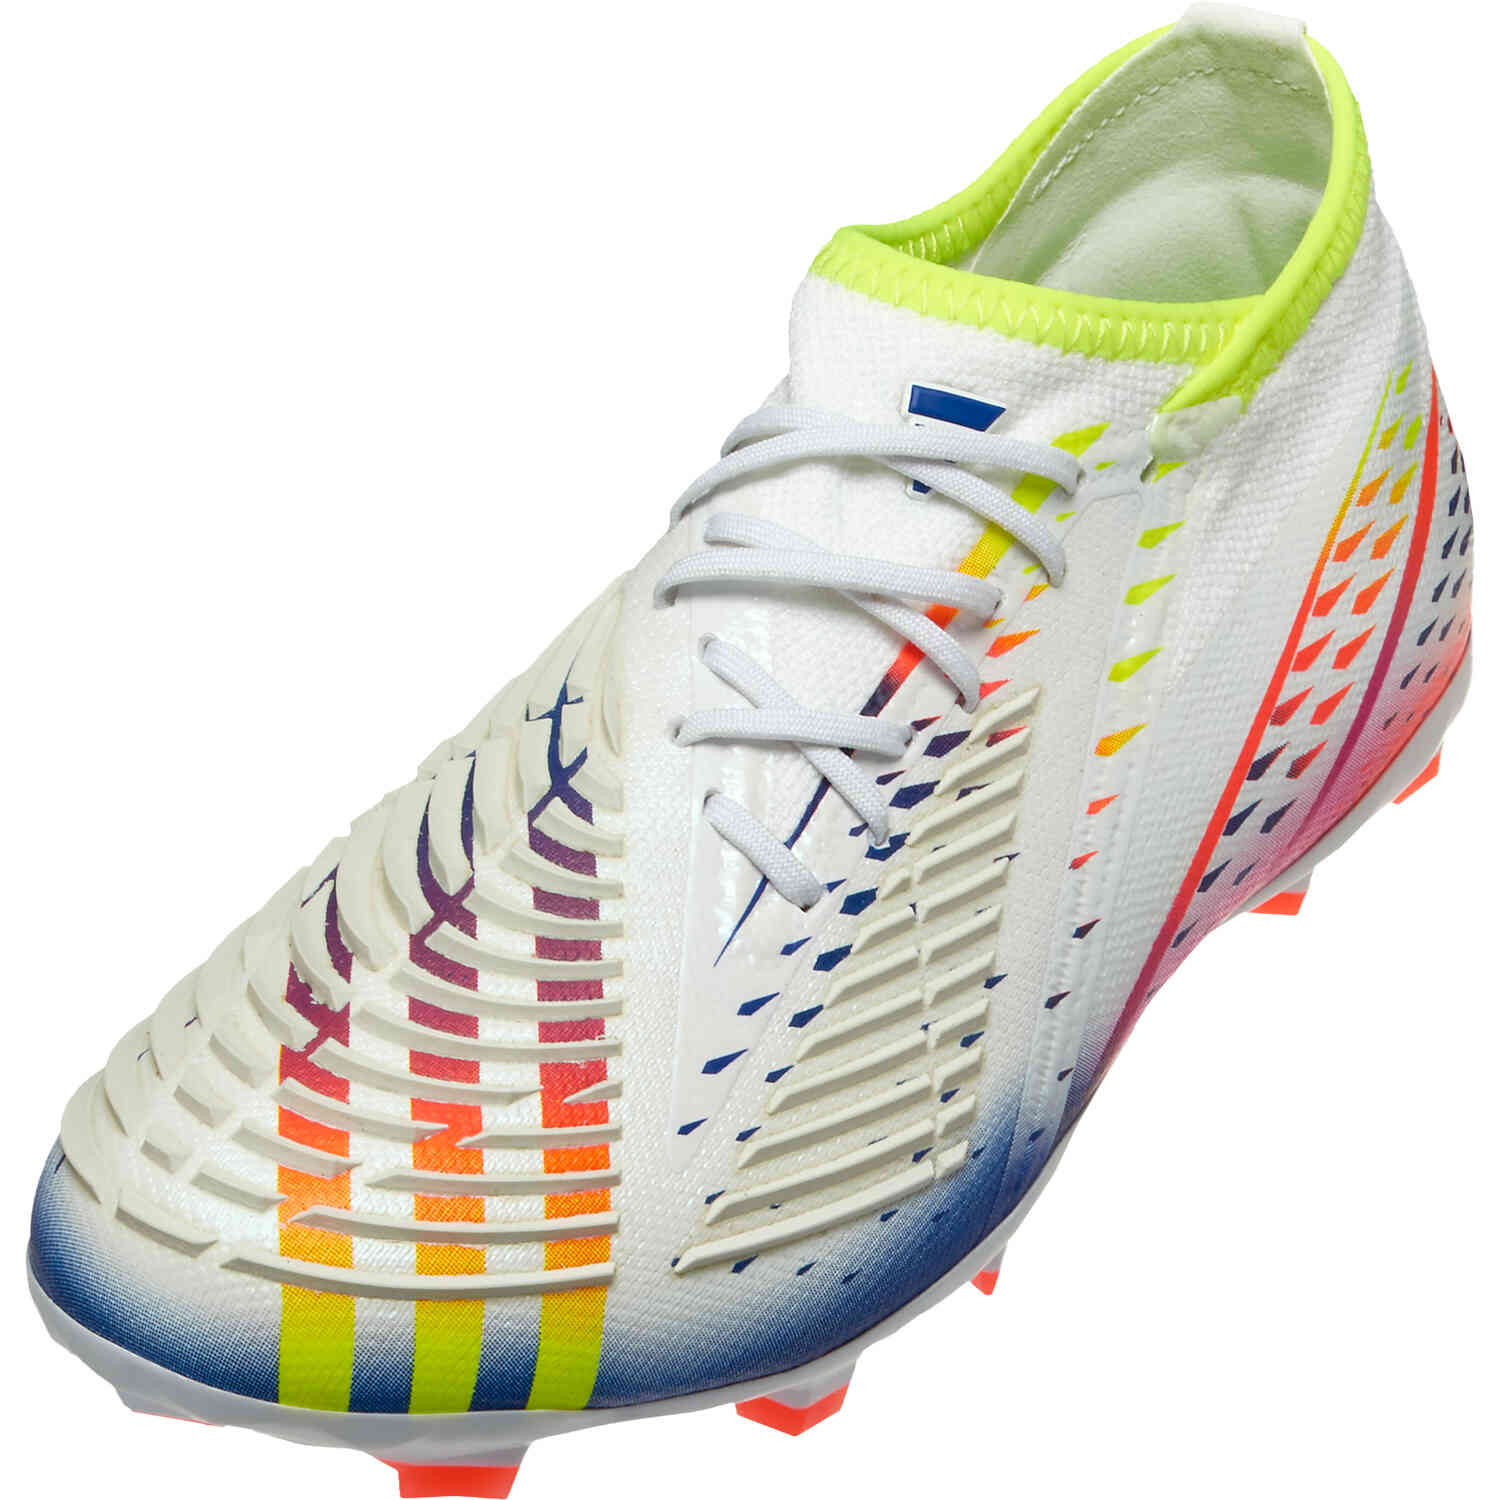 Kids adidas Predator FG Firm Ground Soccer Cleats - Al Rihla Pack - Soccer